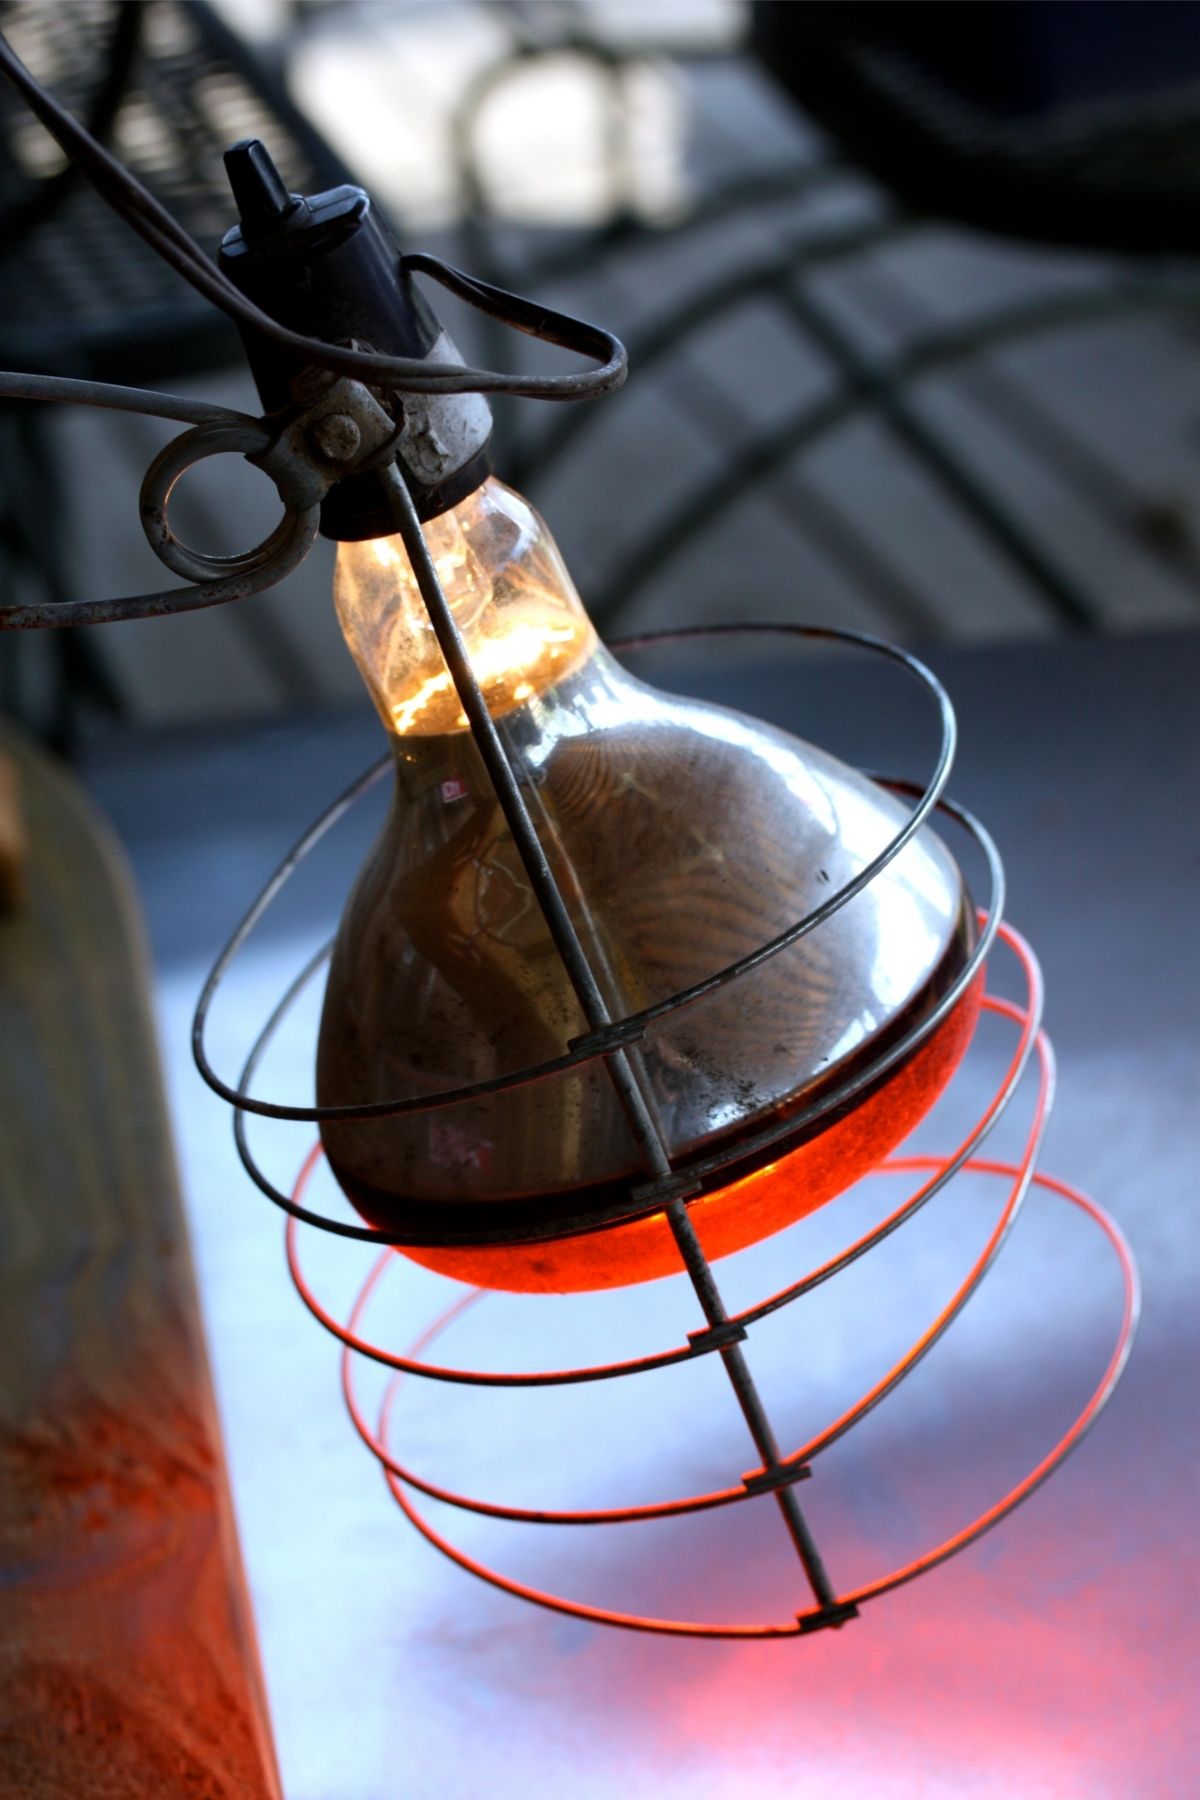 Heat lamp